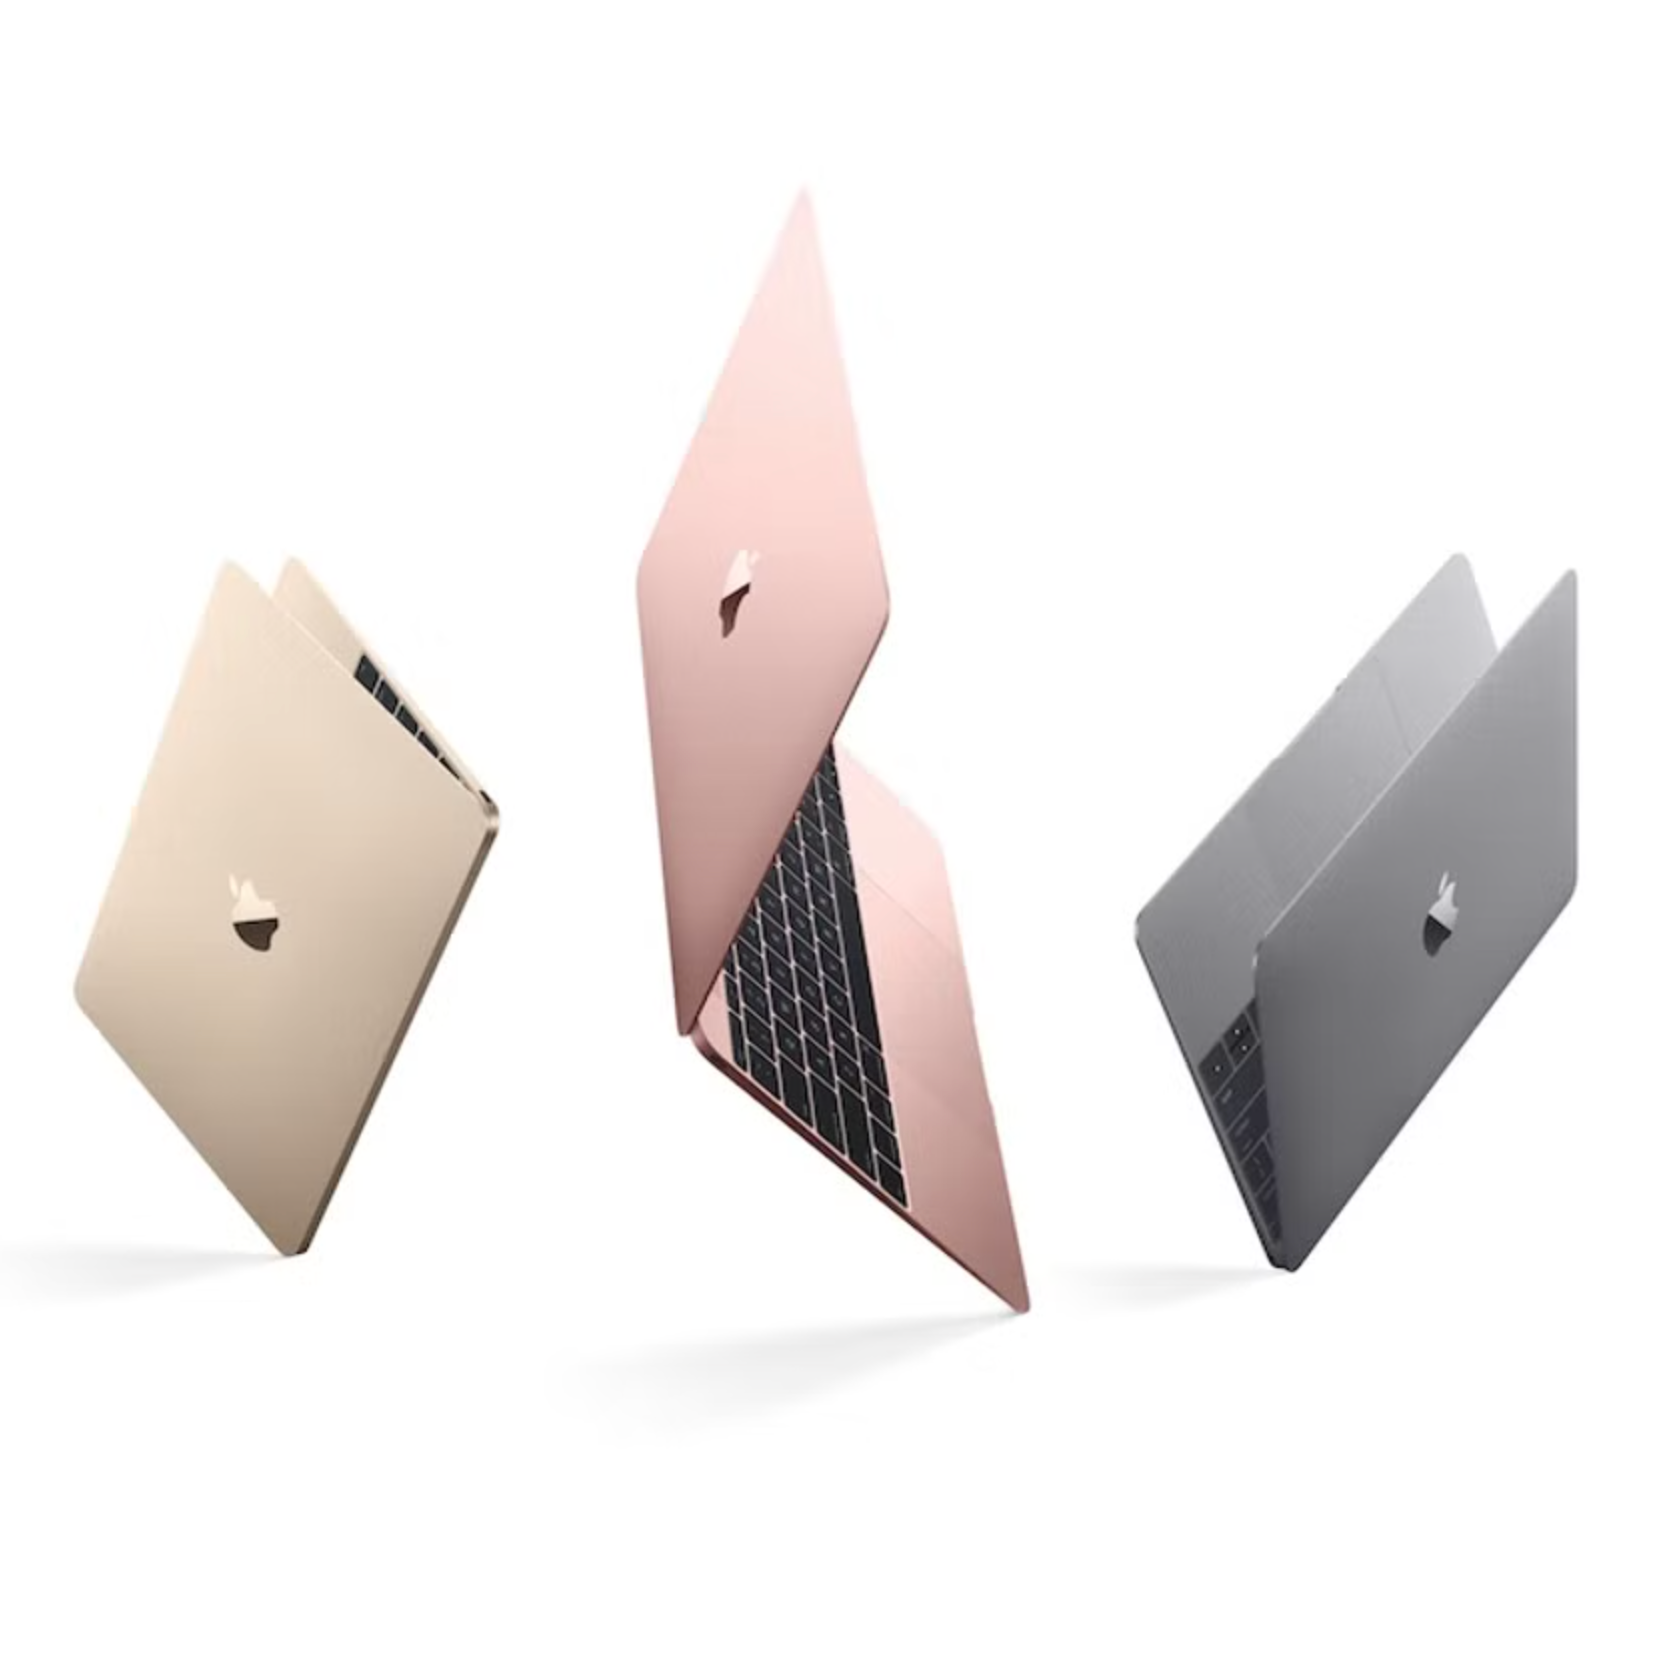 Apple MacBook (12-inch, Retina) - (2017)